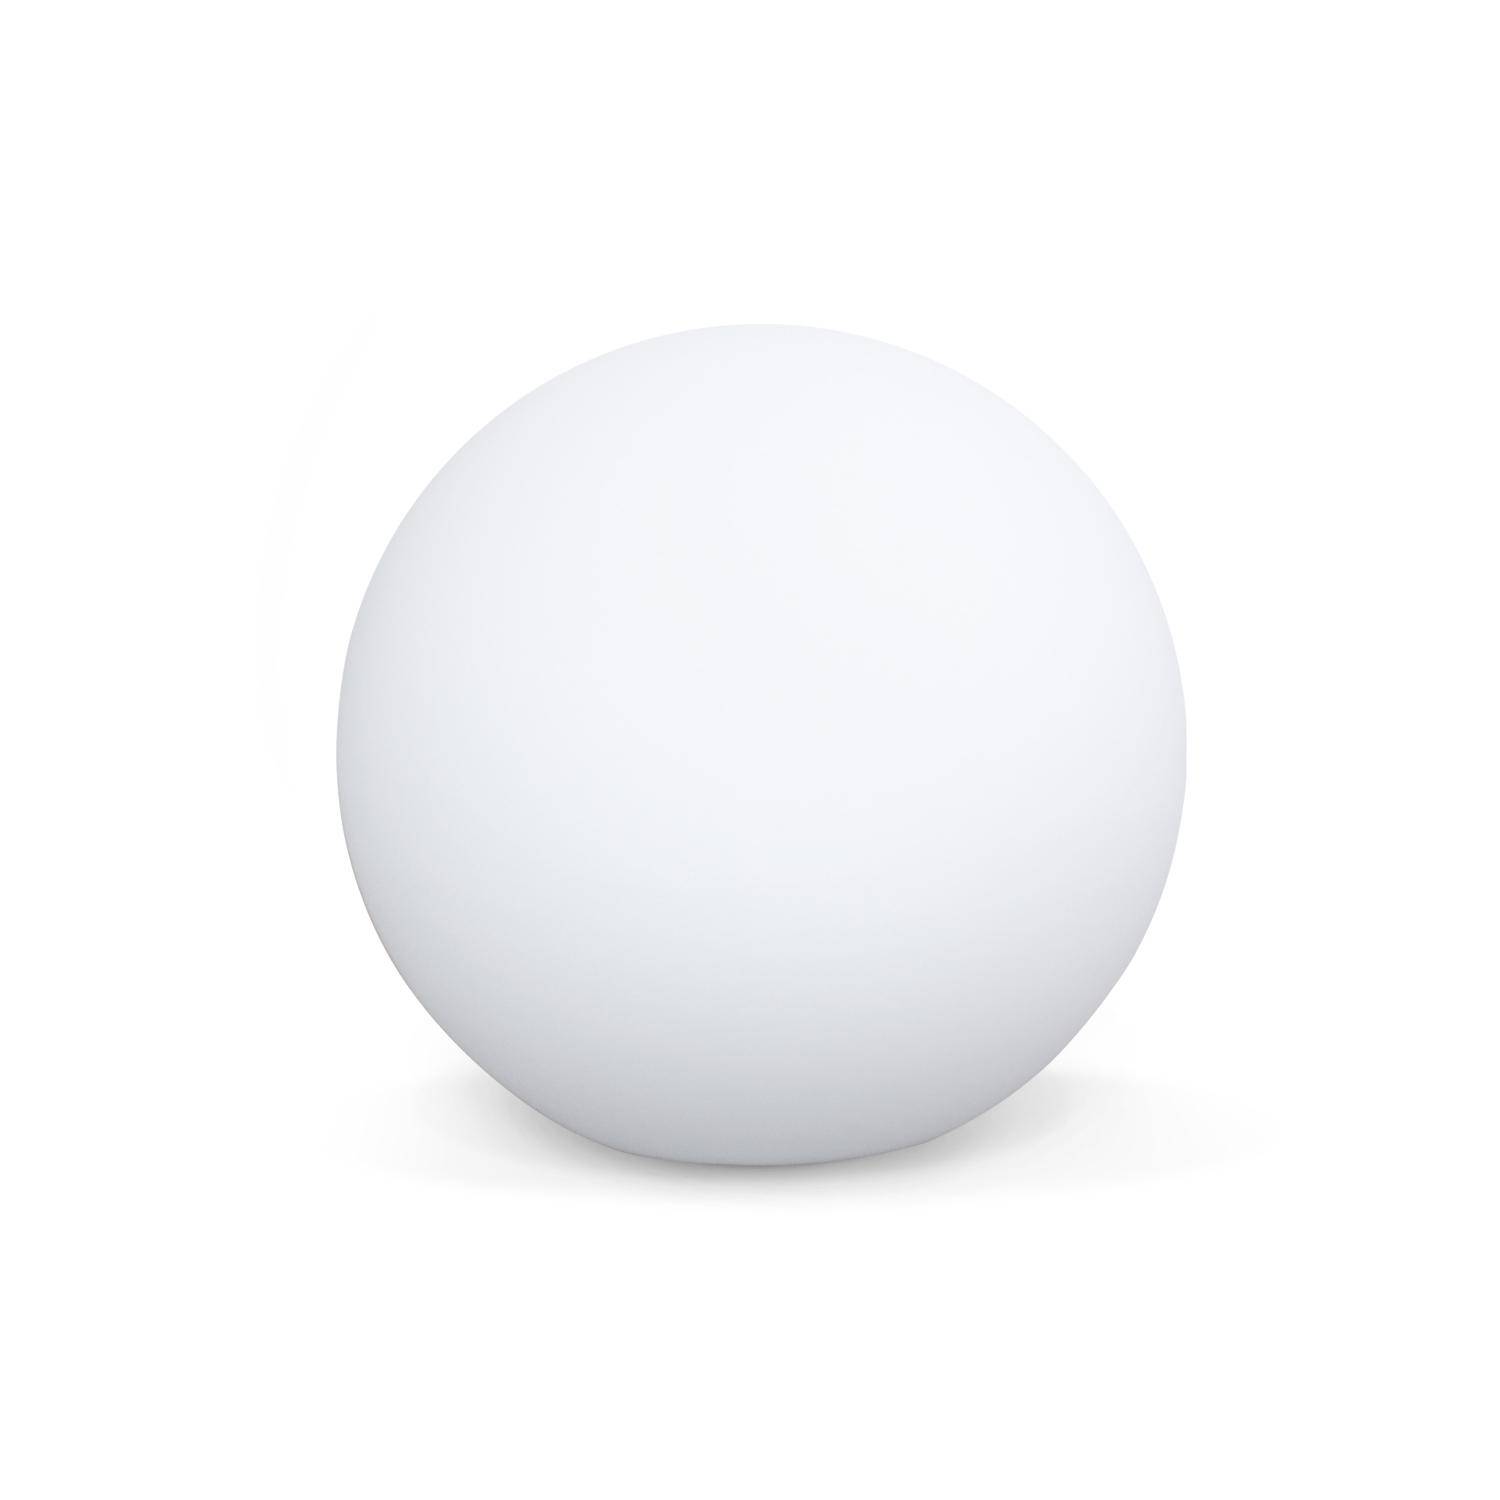 40cm spherical LED lamp – Decorative light sphere, remote control, Warm white Photo1